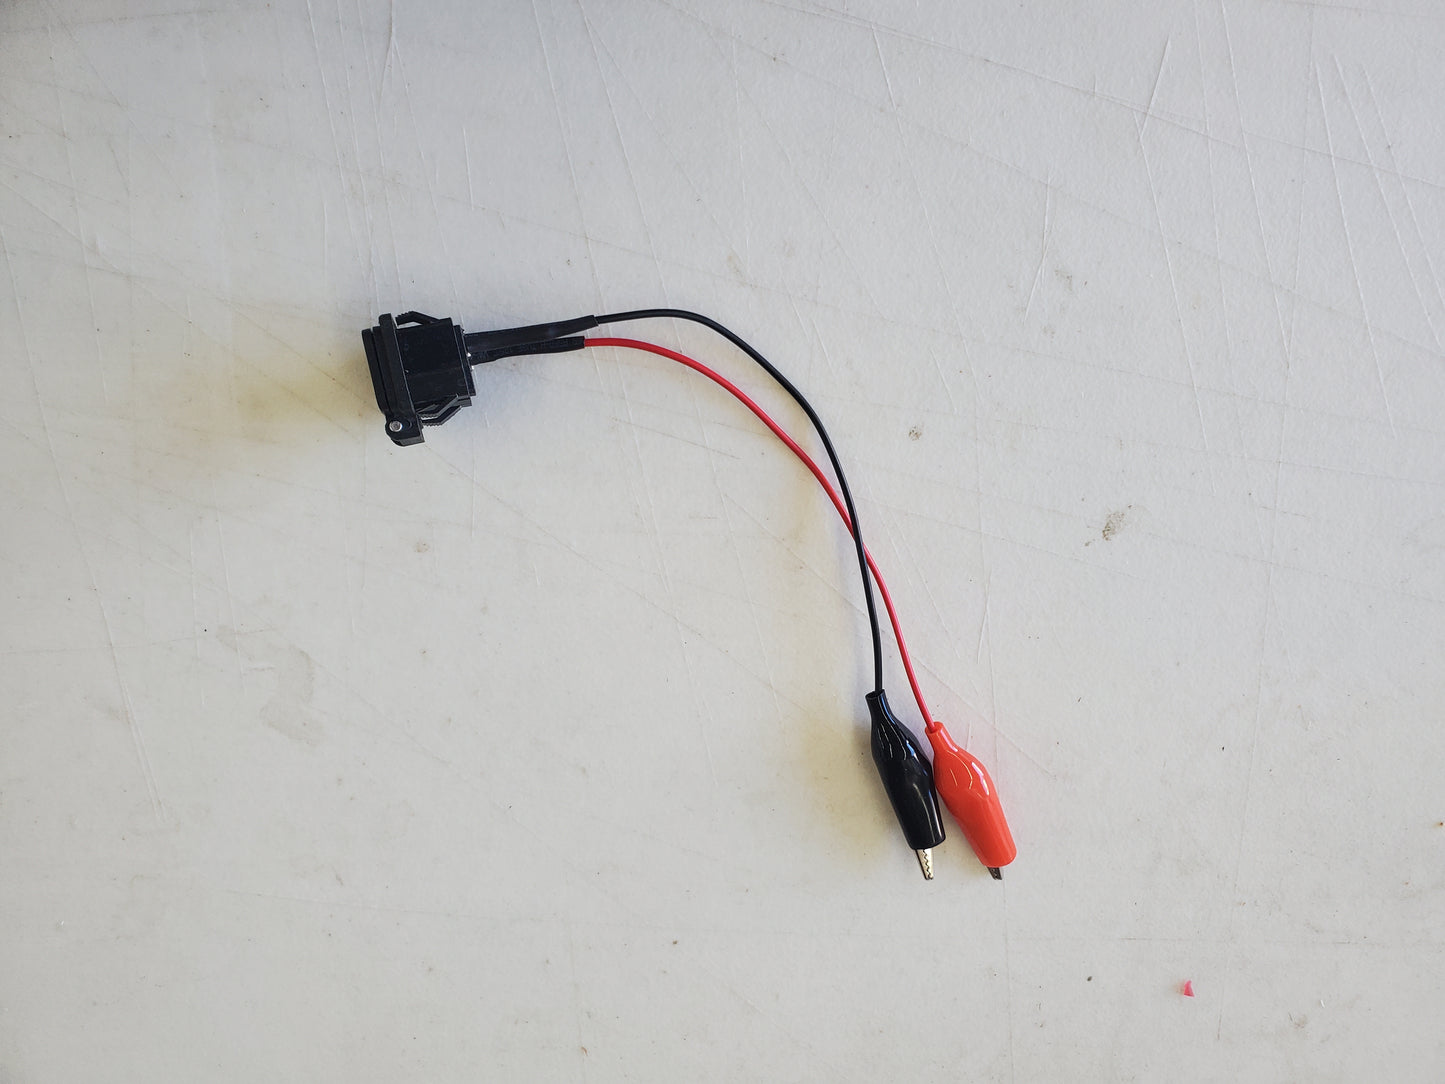 External battery charger adapter w/alligator clips